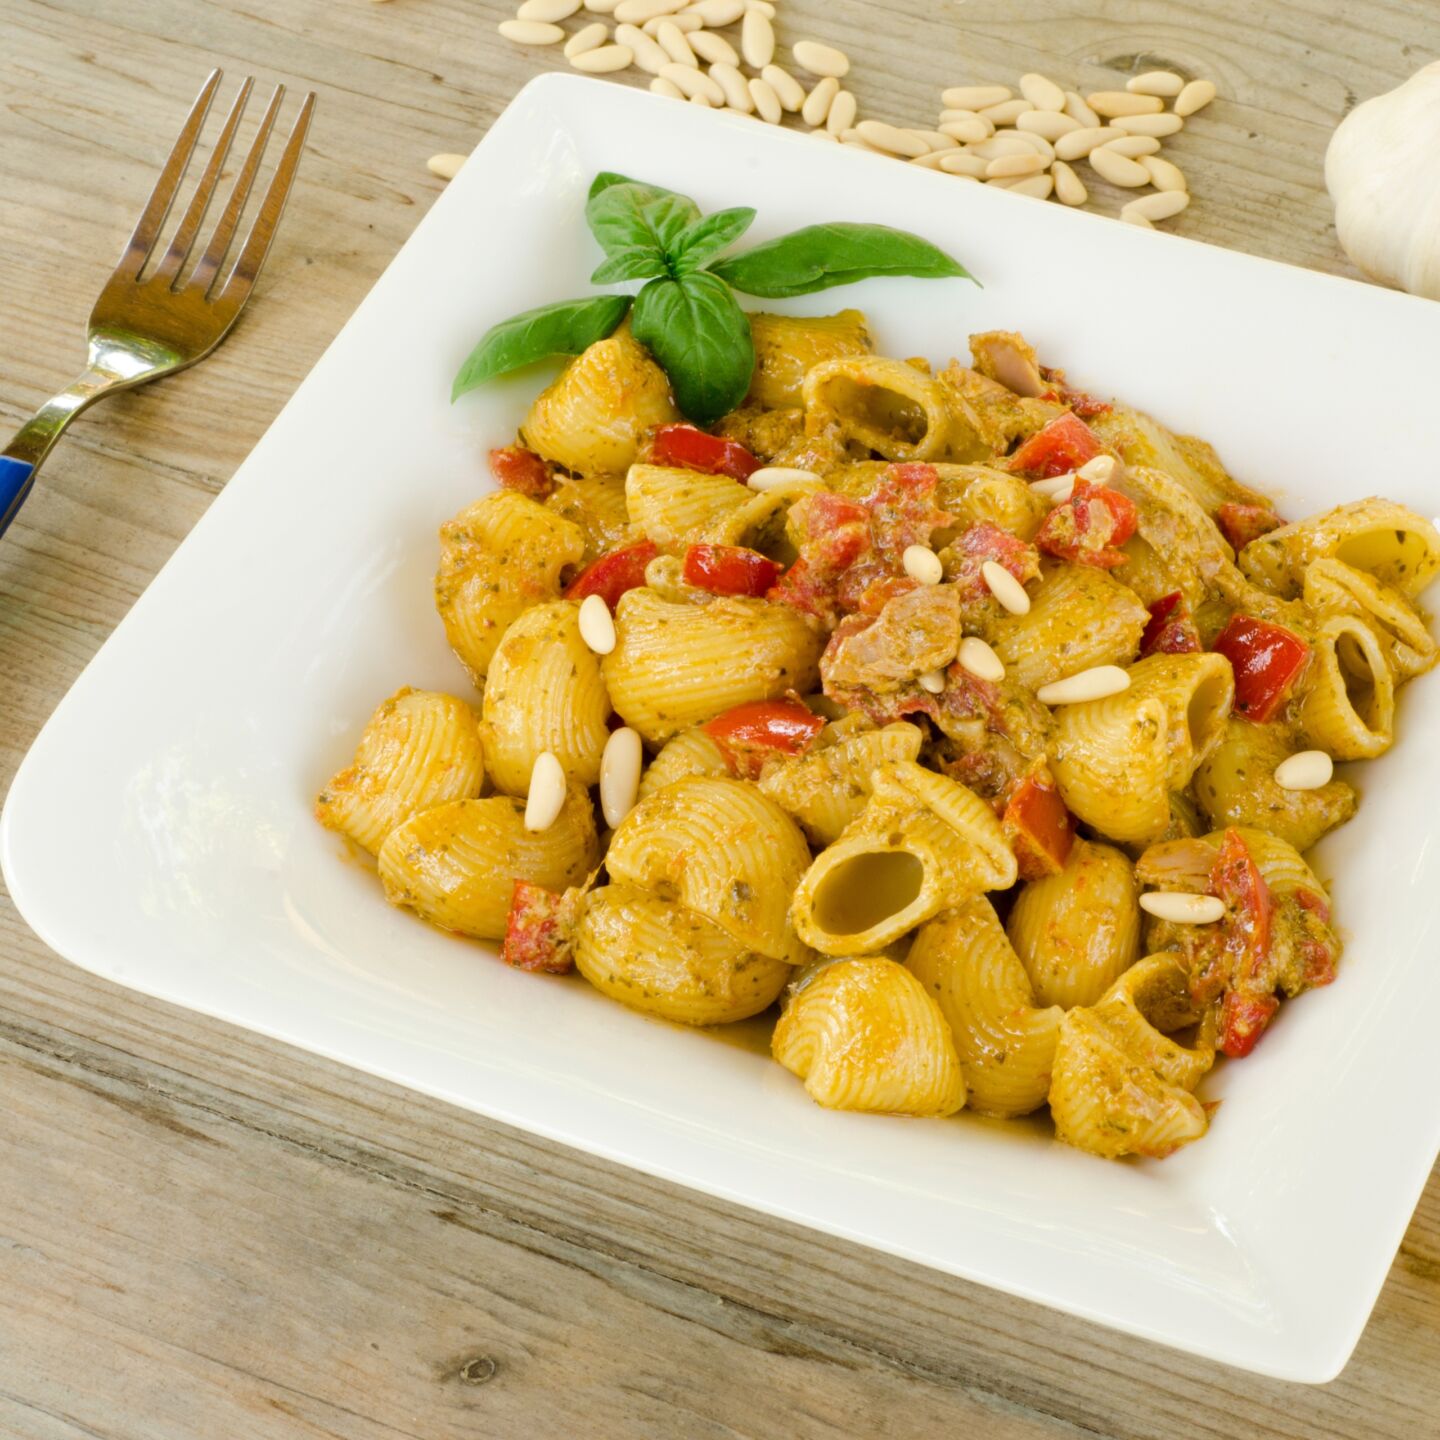 32 different types of pasta - lumache